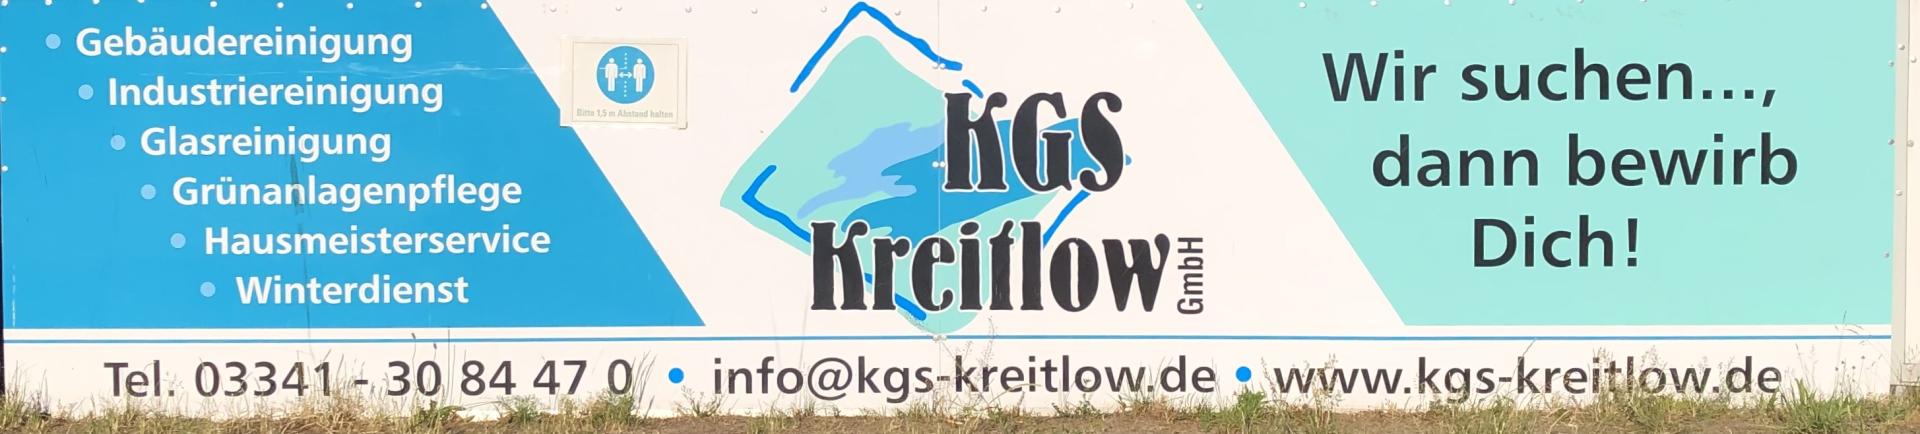 KGS Kreitlow